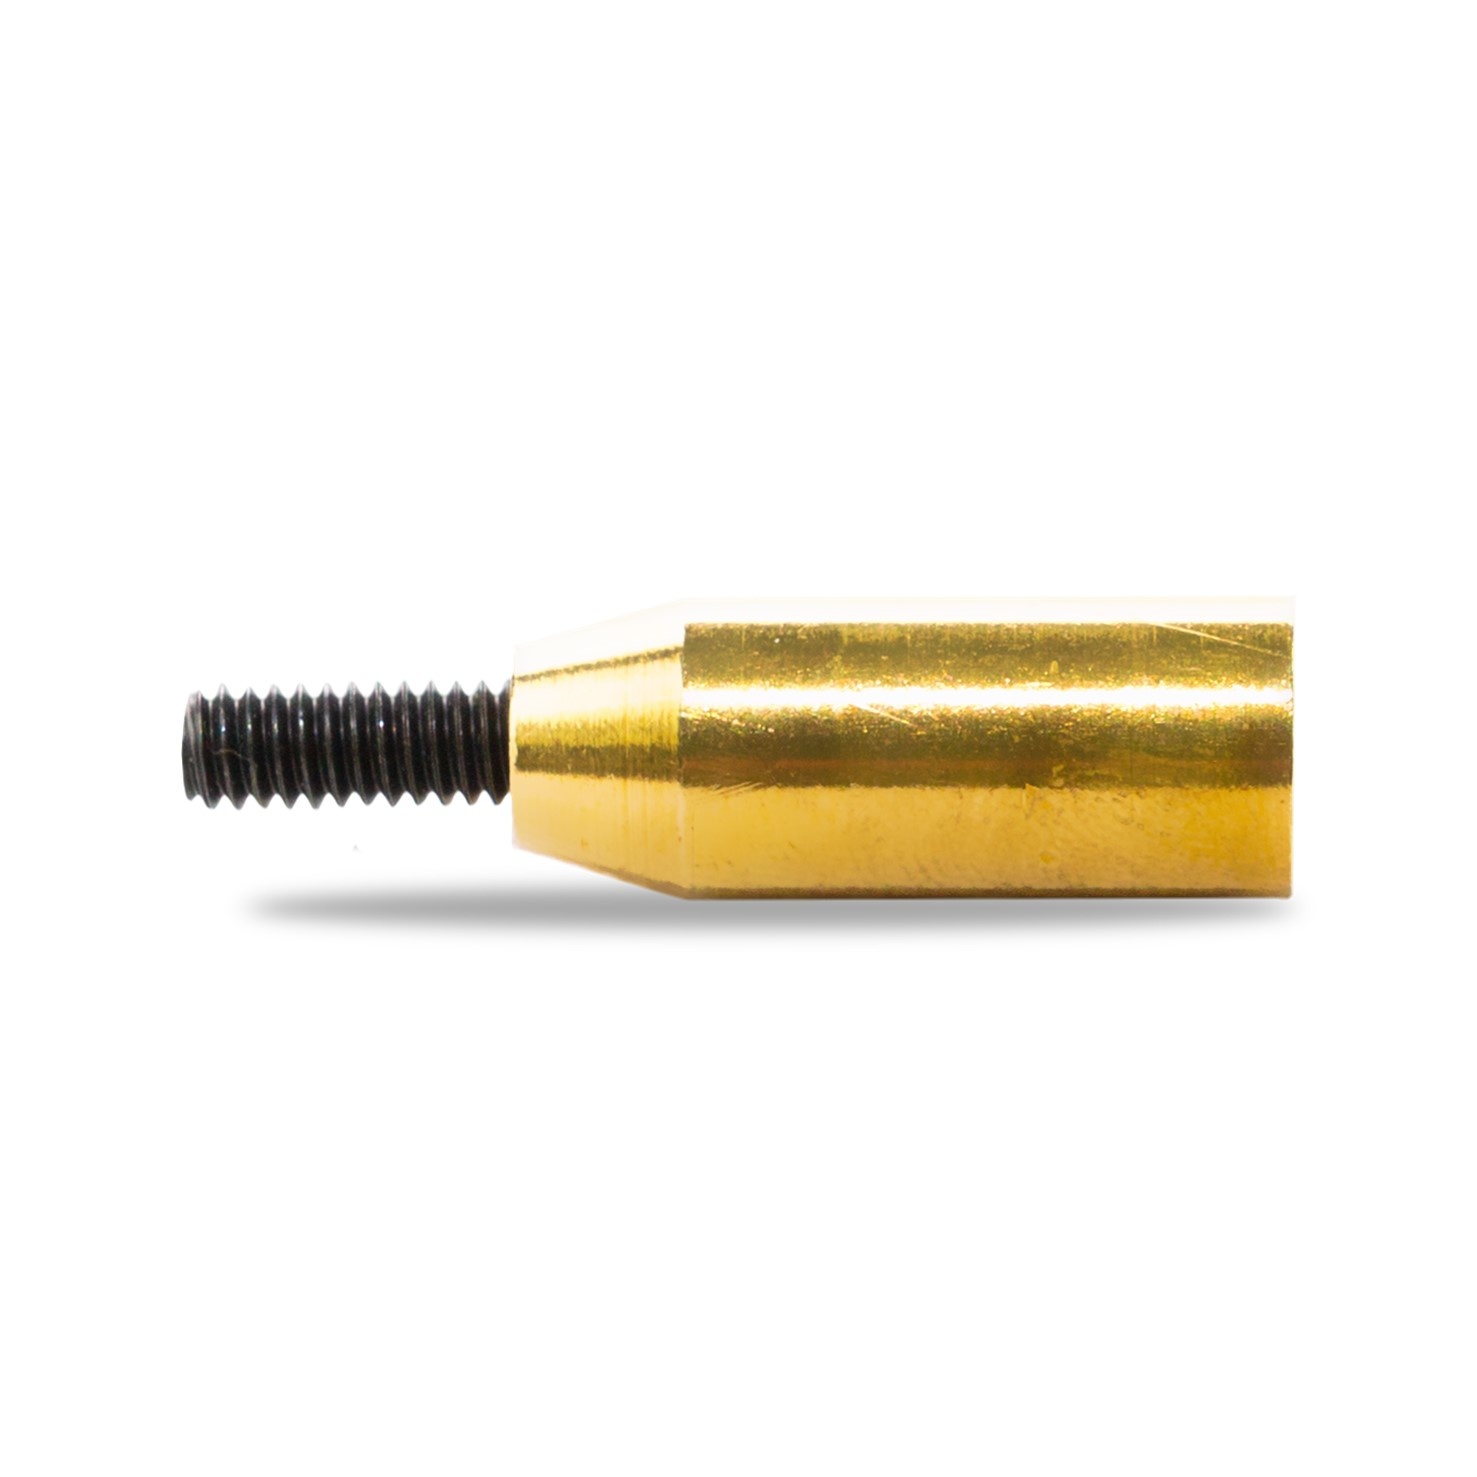 Pro-Shot Cleaning Rod - Shotgun Adapter - Adapts #8-32 to #5/16-27